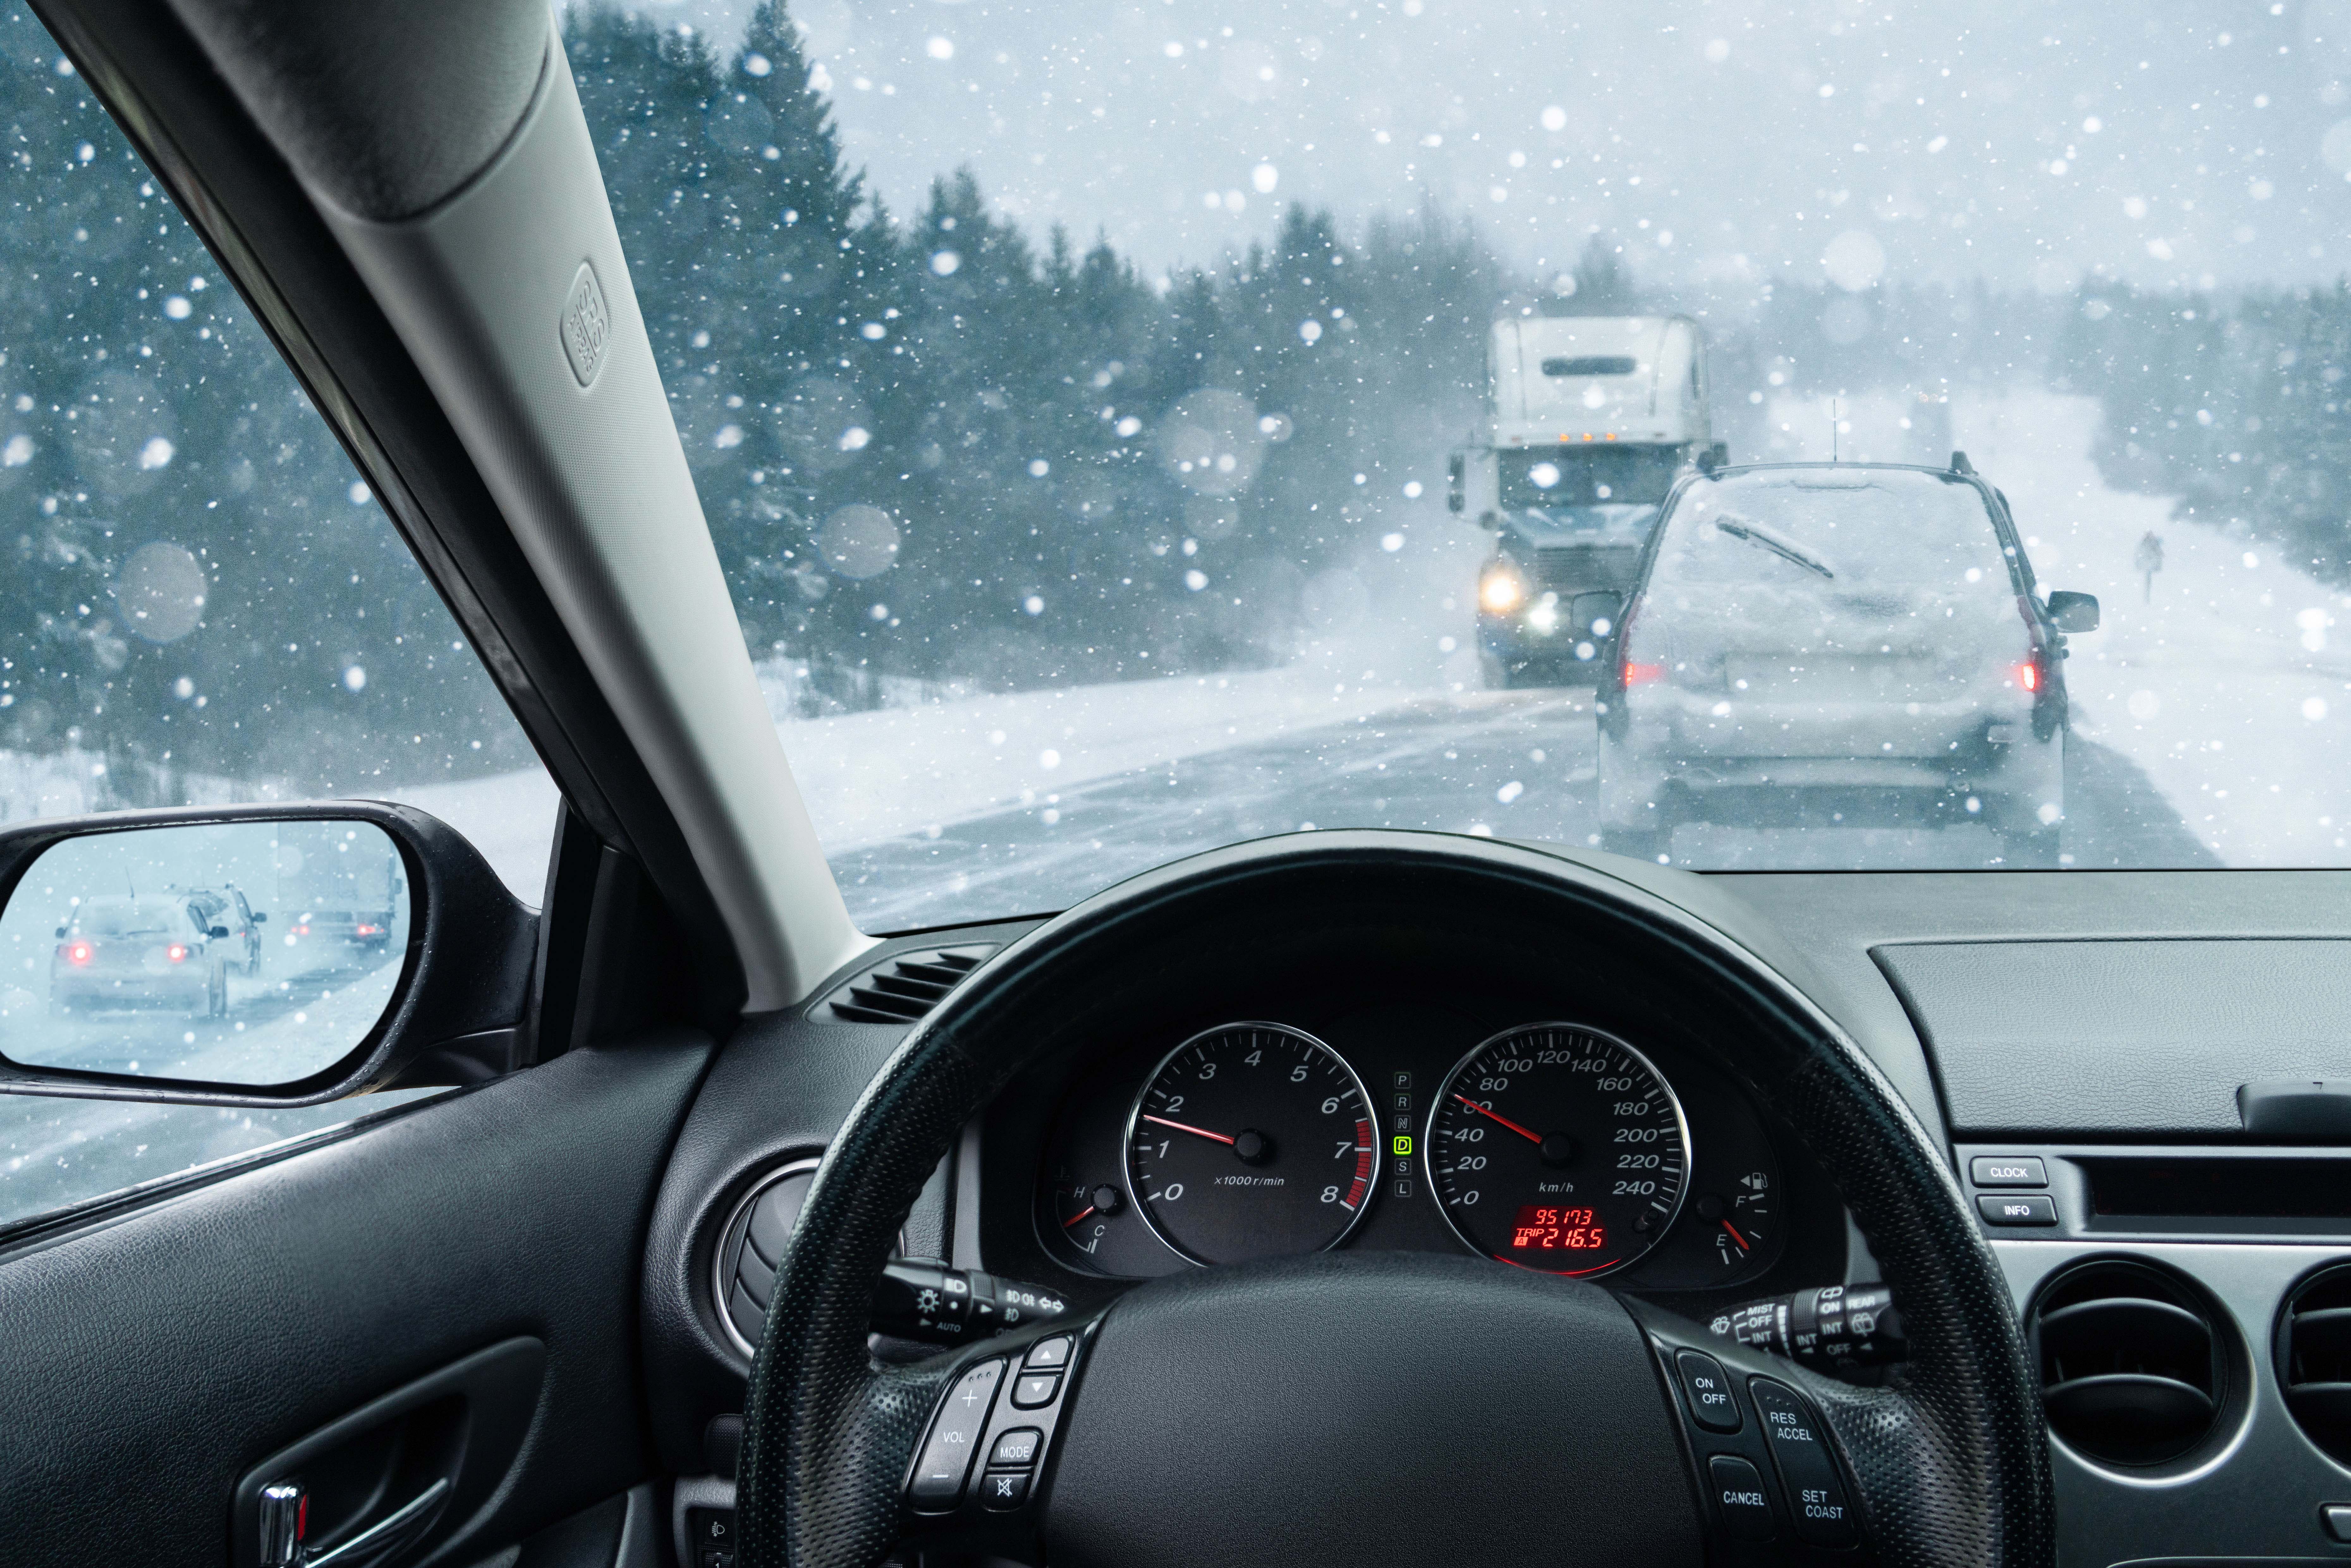 Fundas para coche: evita nieve, agua, frio